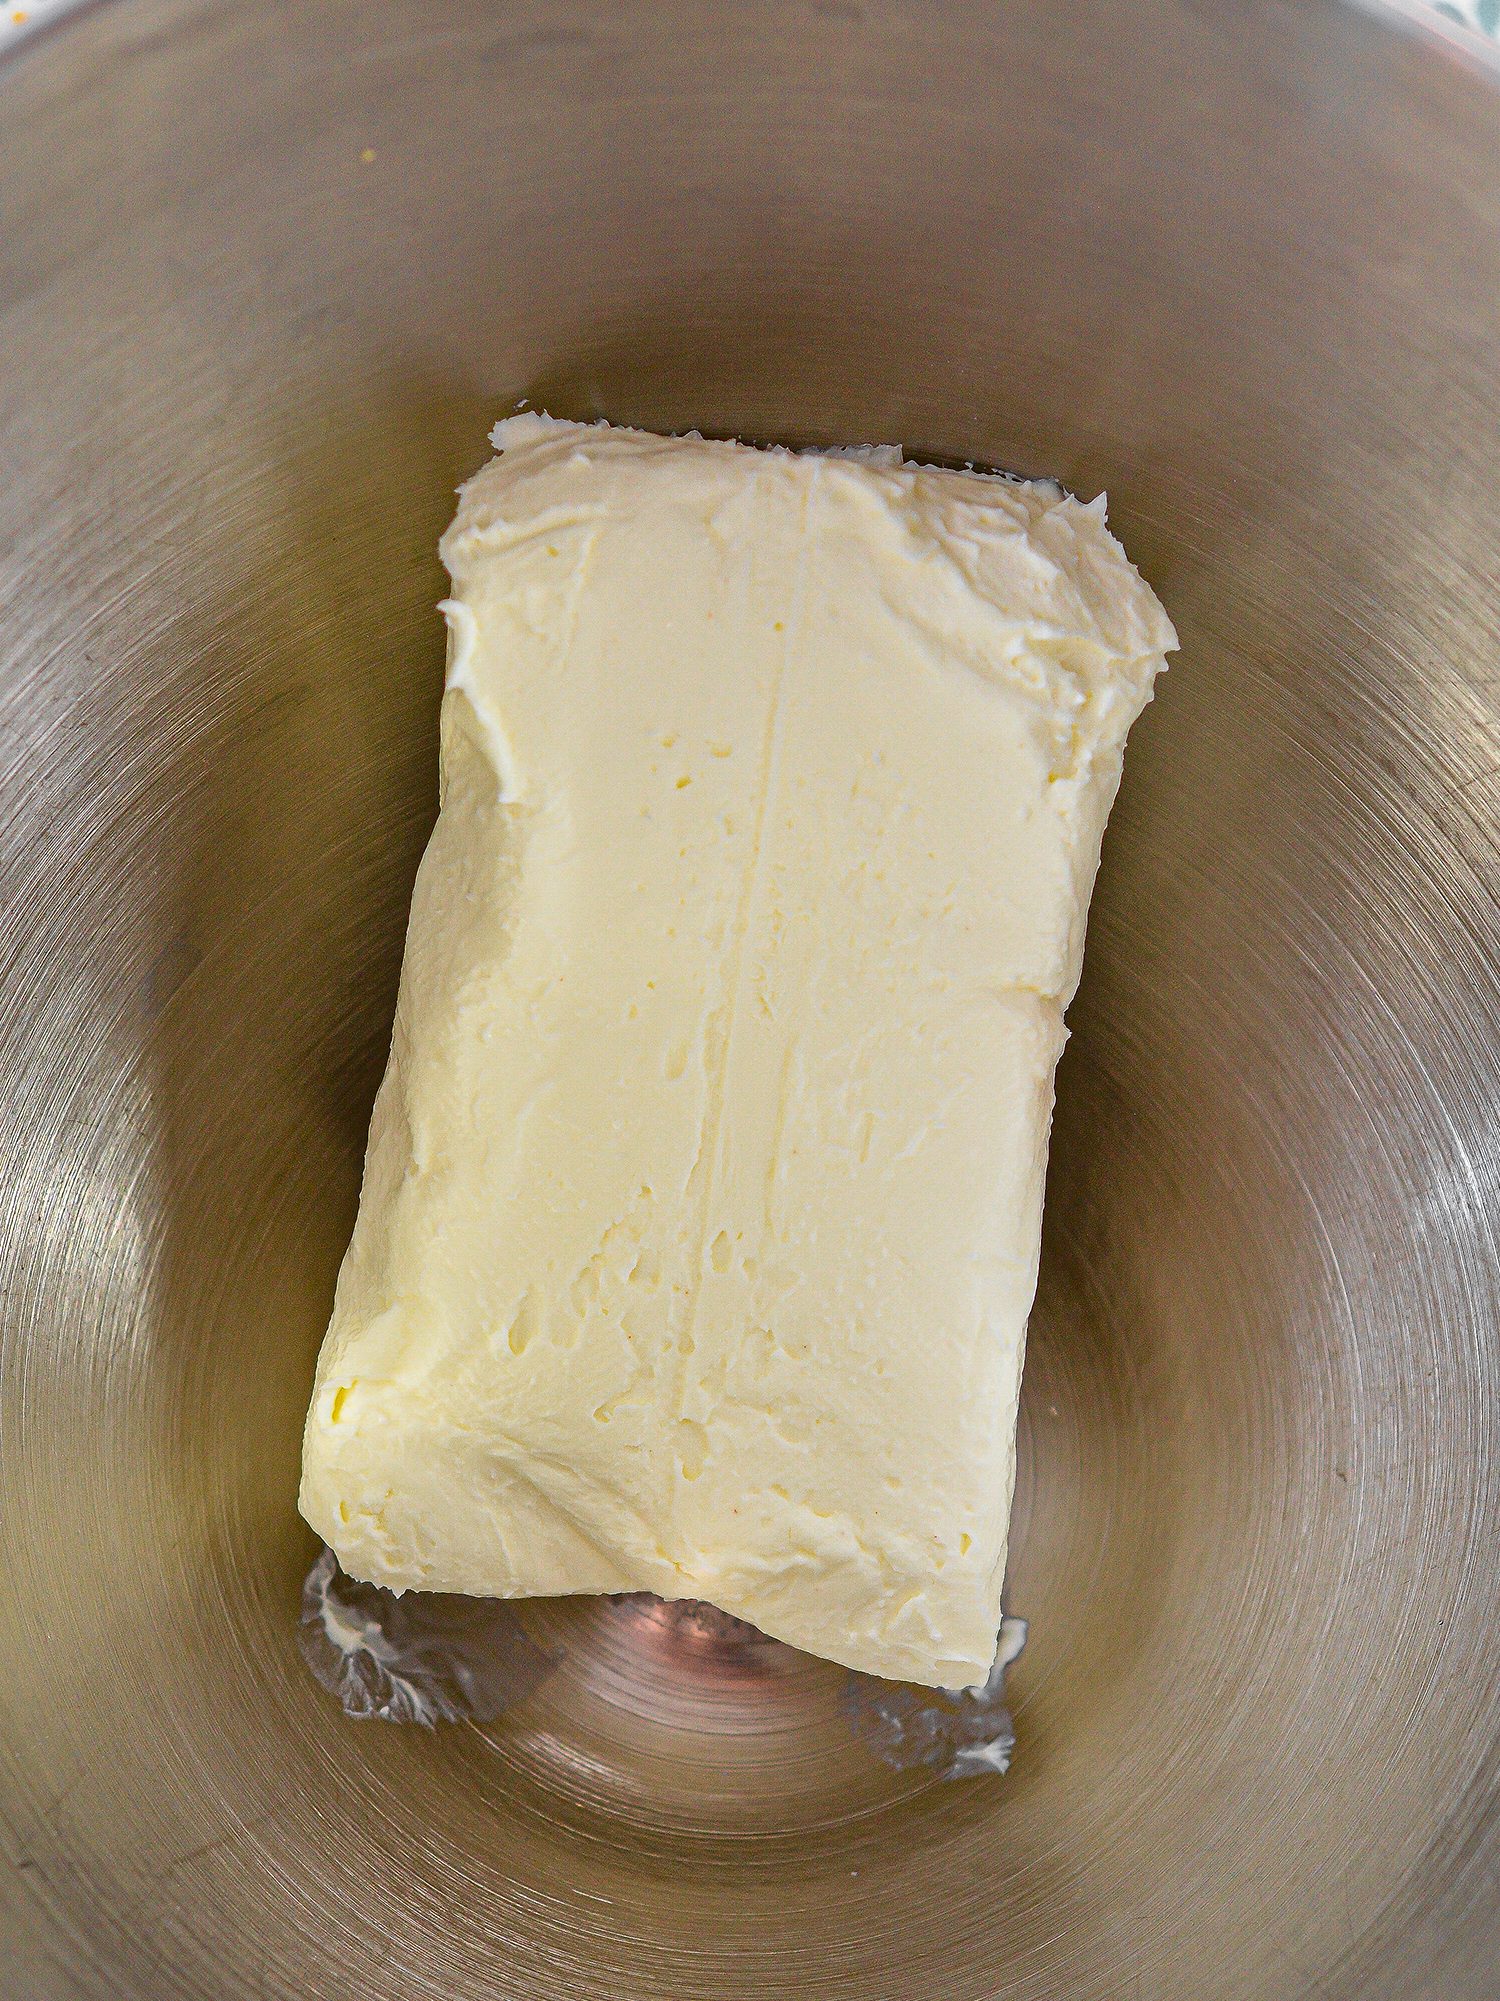 Adding cream cheese